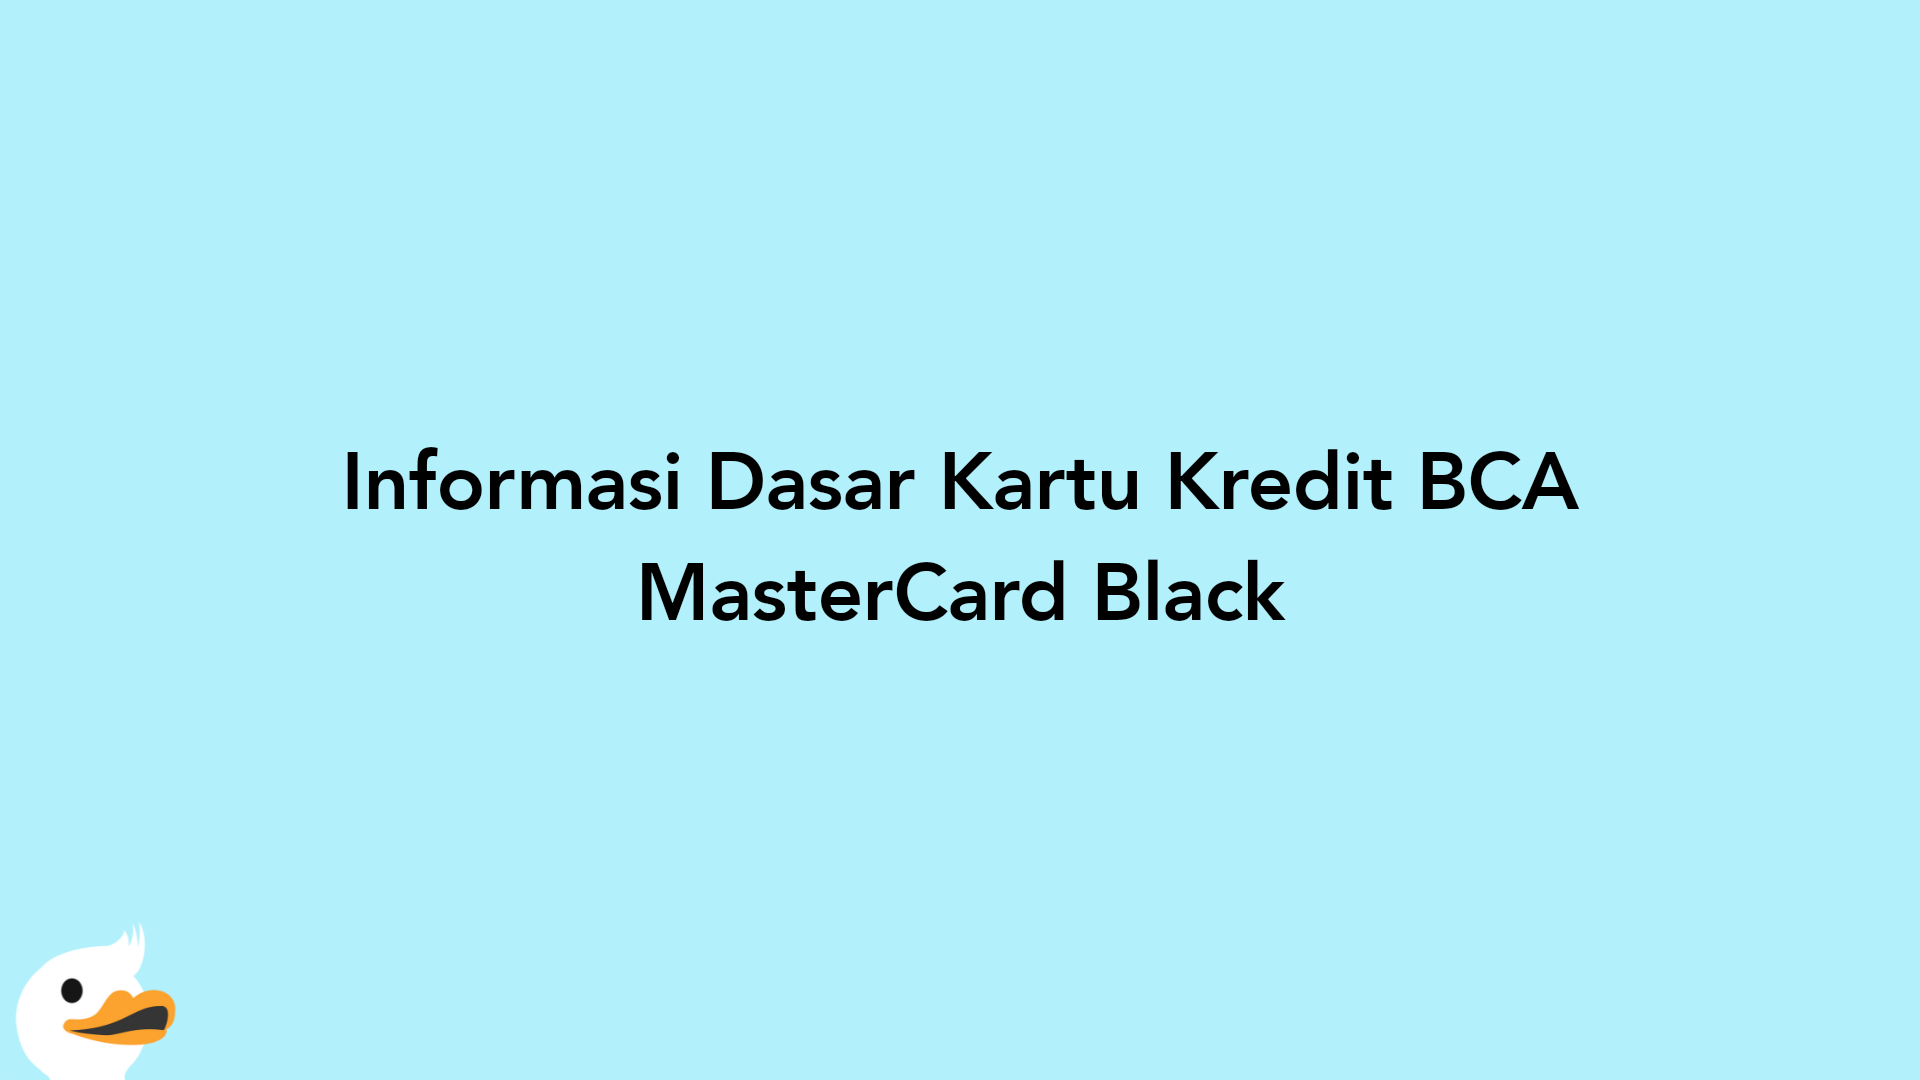 Informasi Dasar Kartu Kredit BCA MasterCard Black